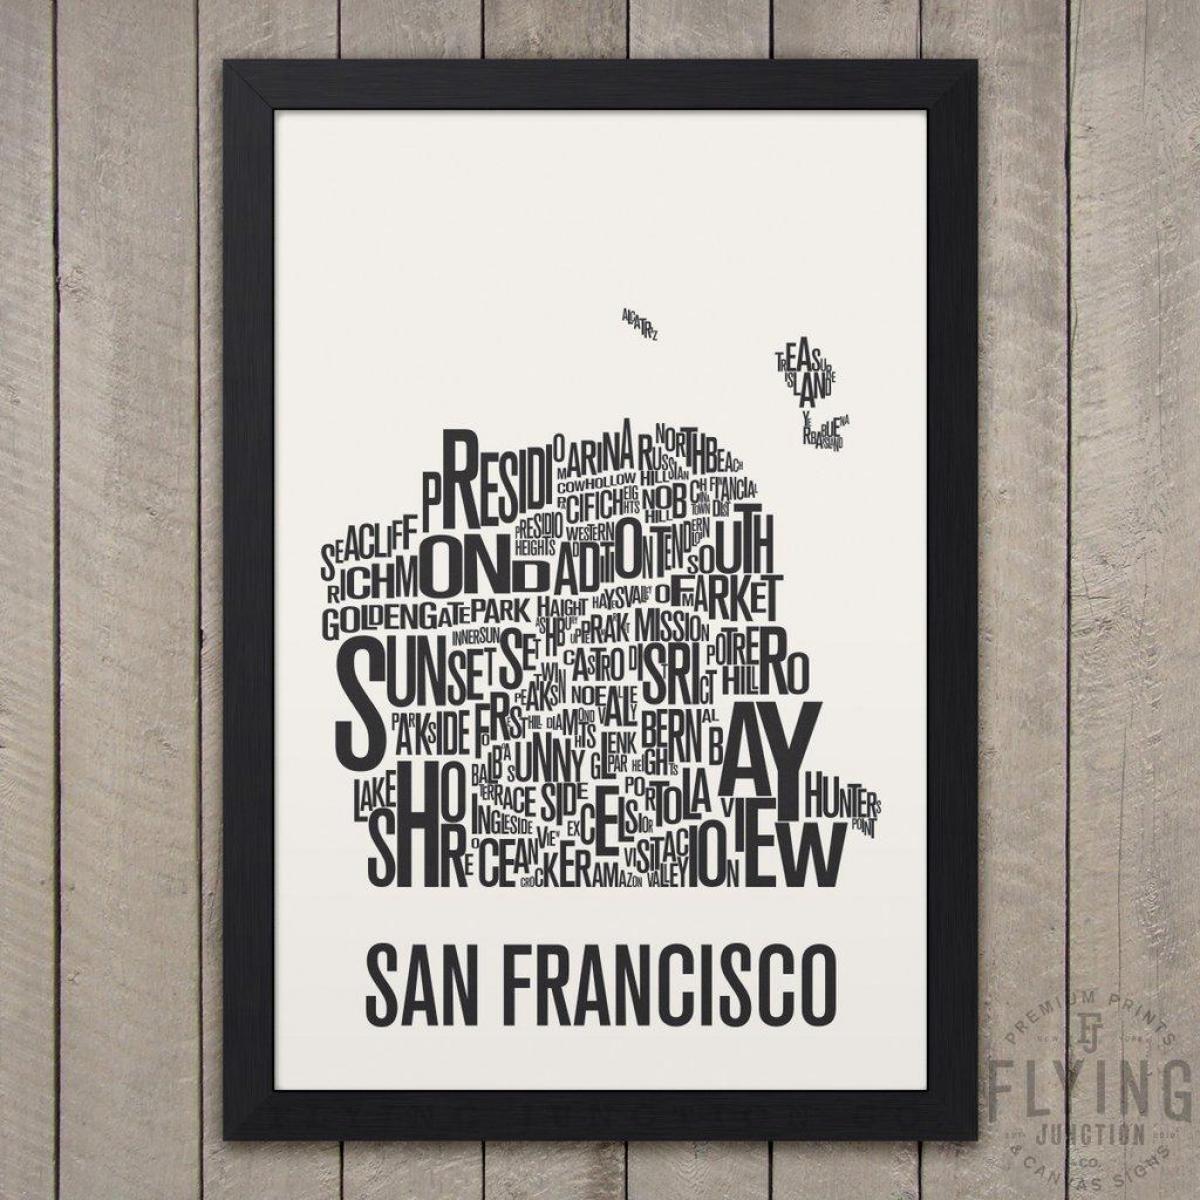 San Francisco typografia kartta